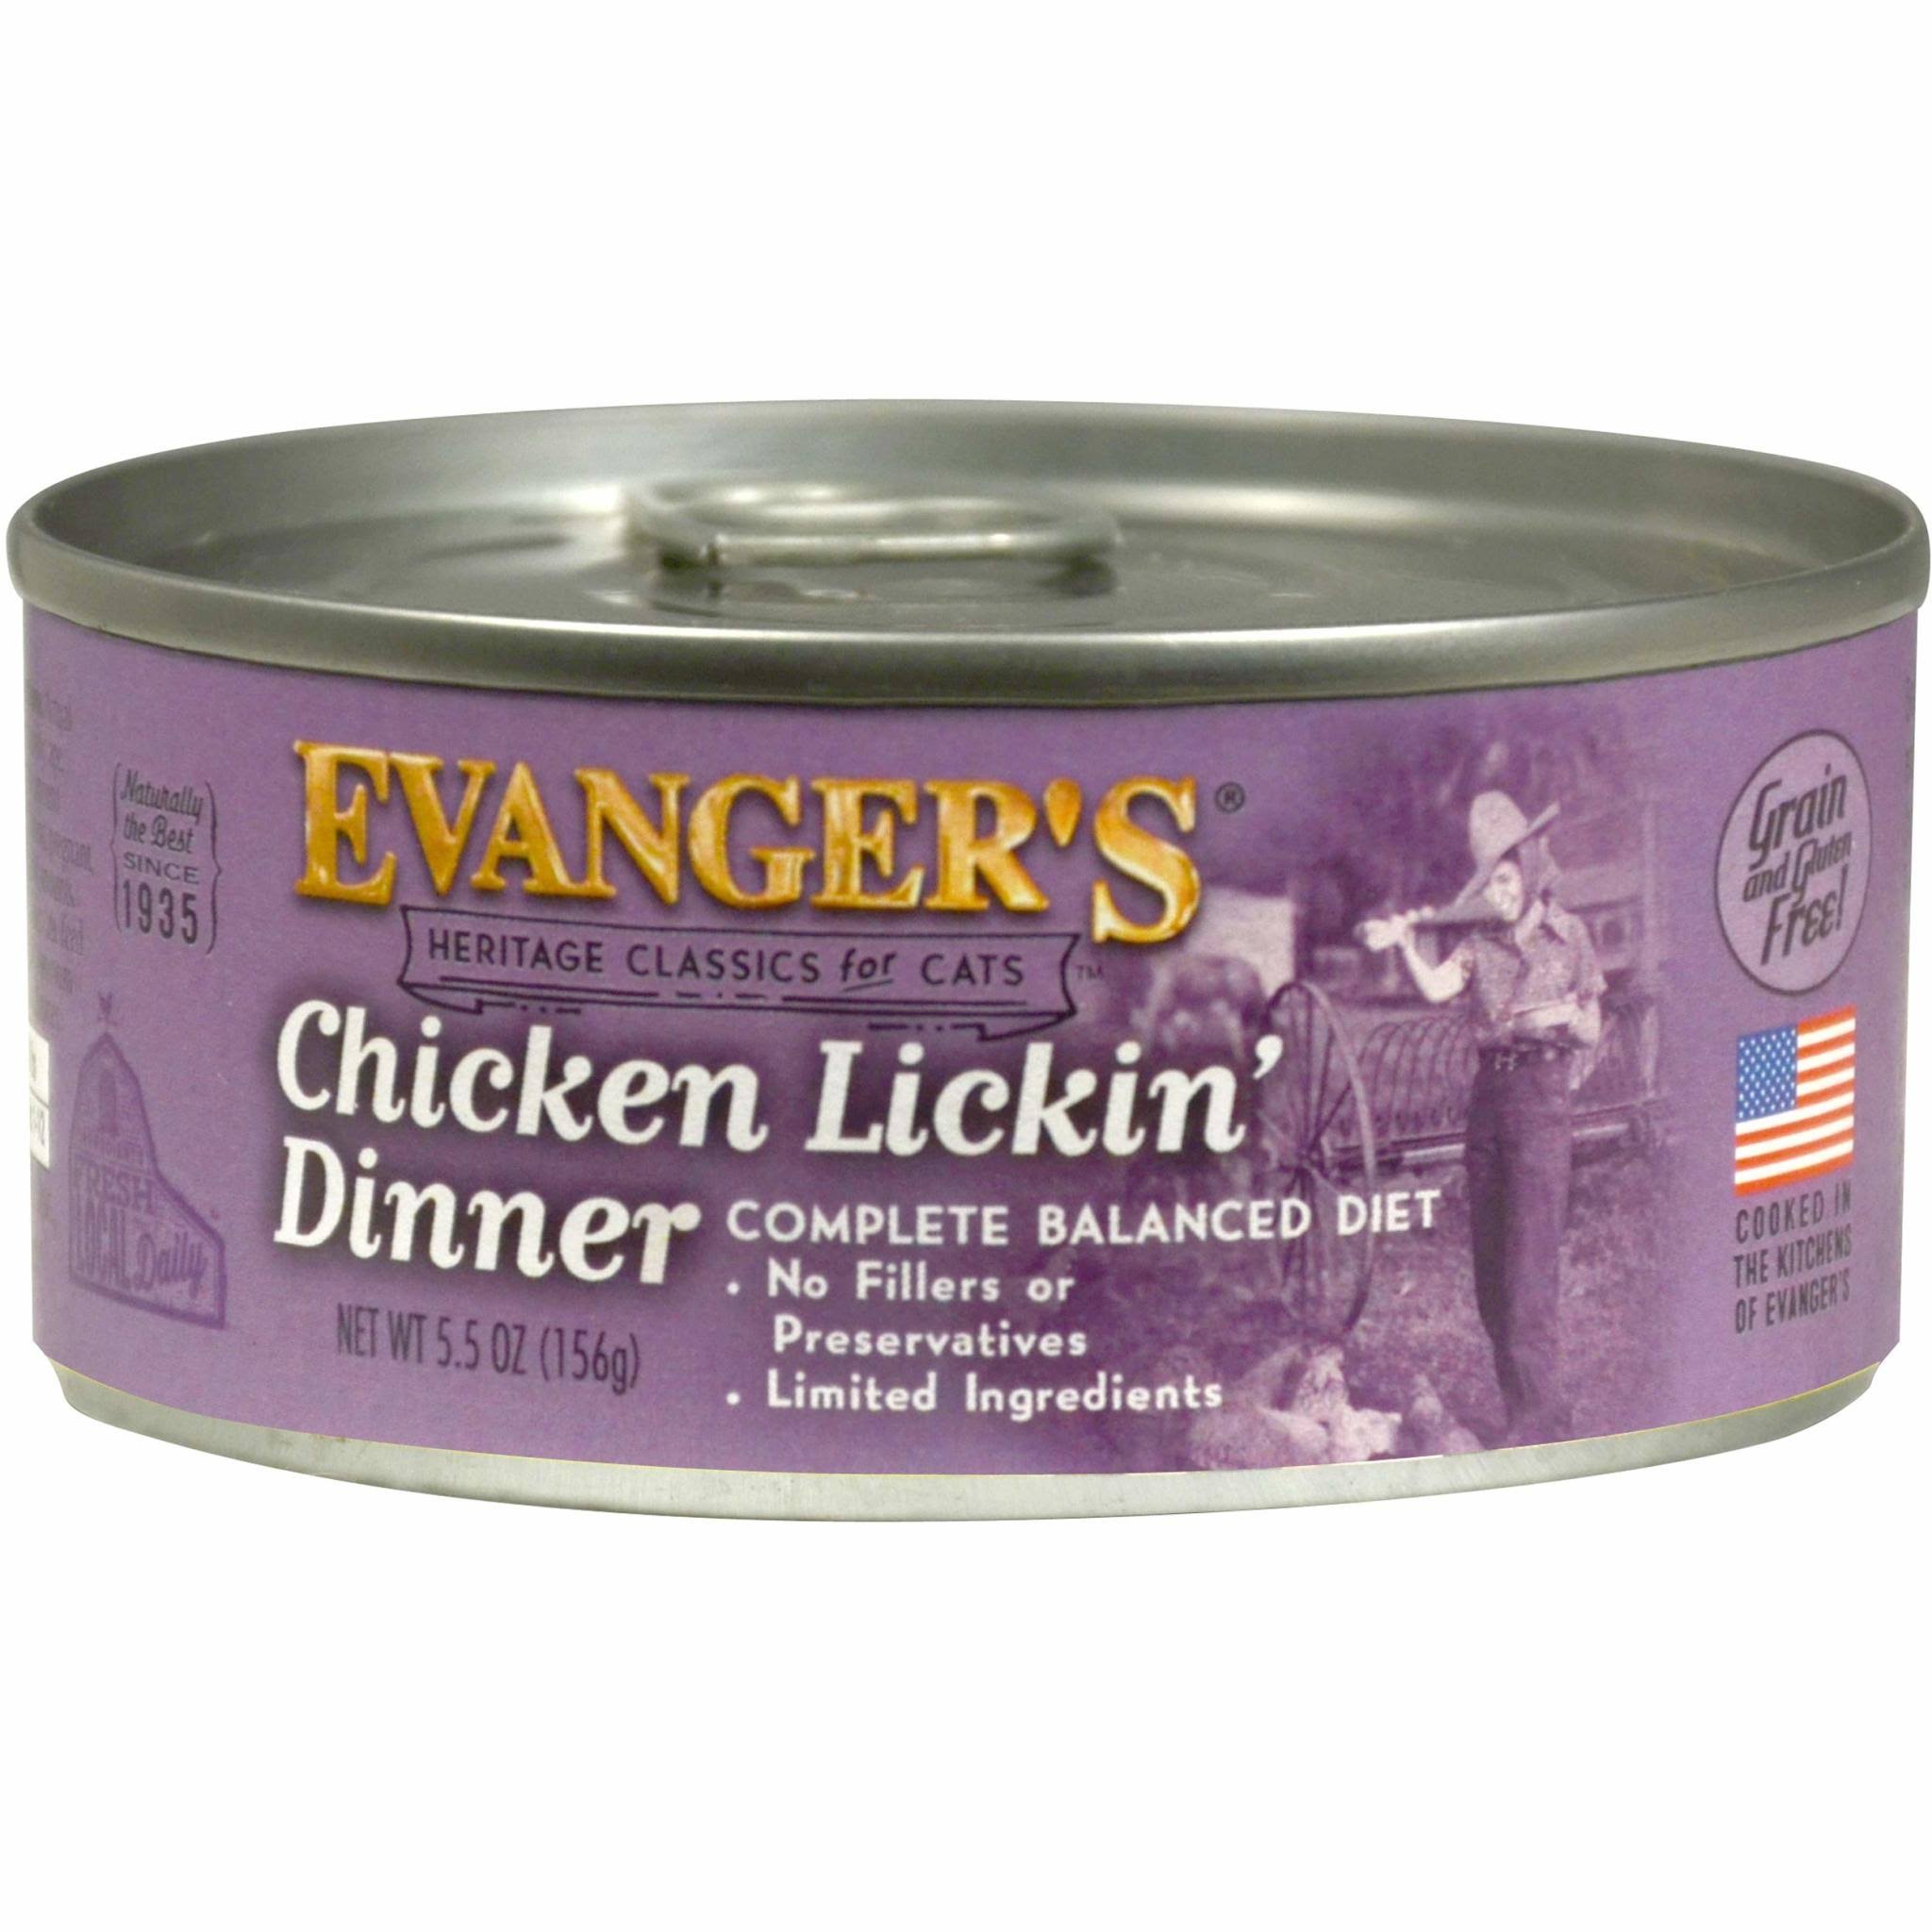 Evanger's Natural Cat Food - Chicken Lickin' Dinner